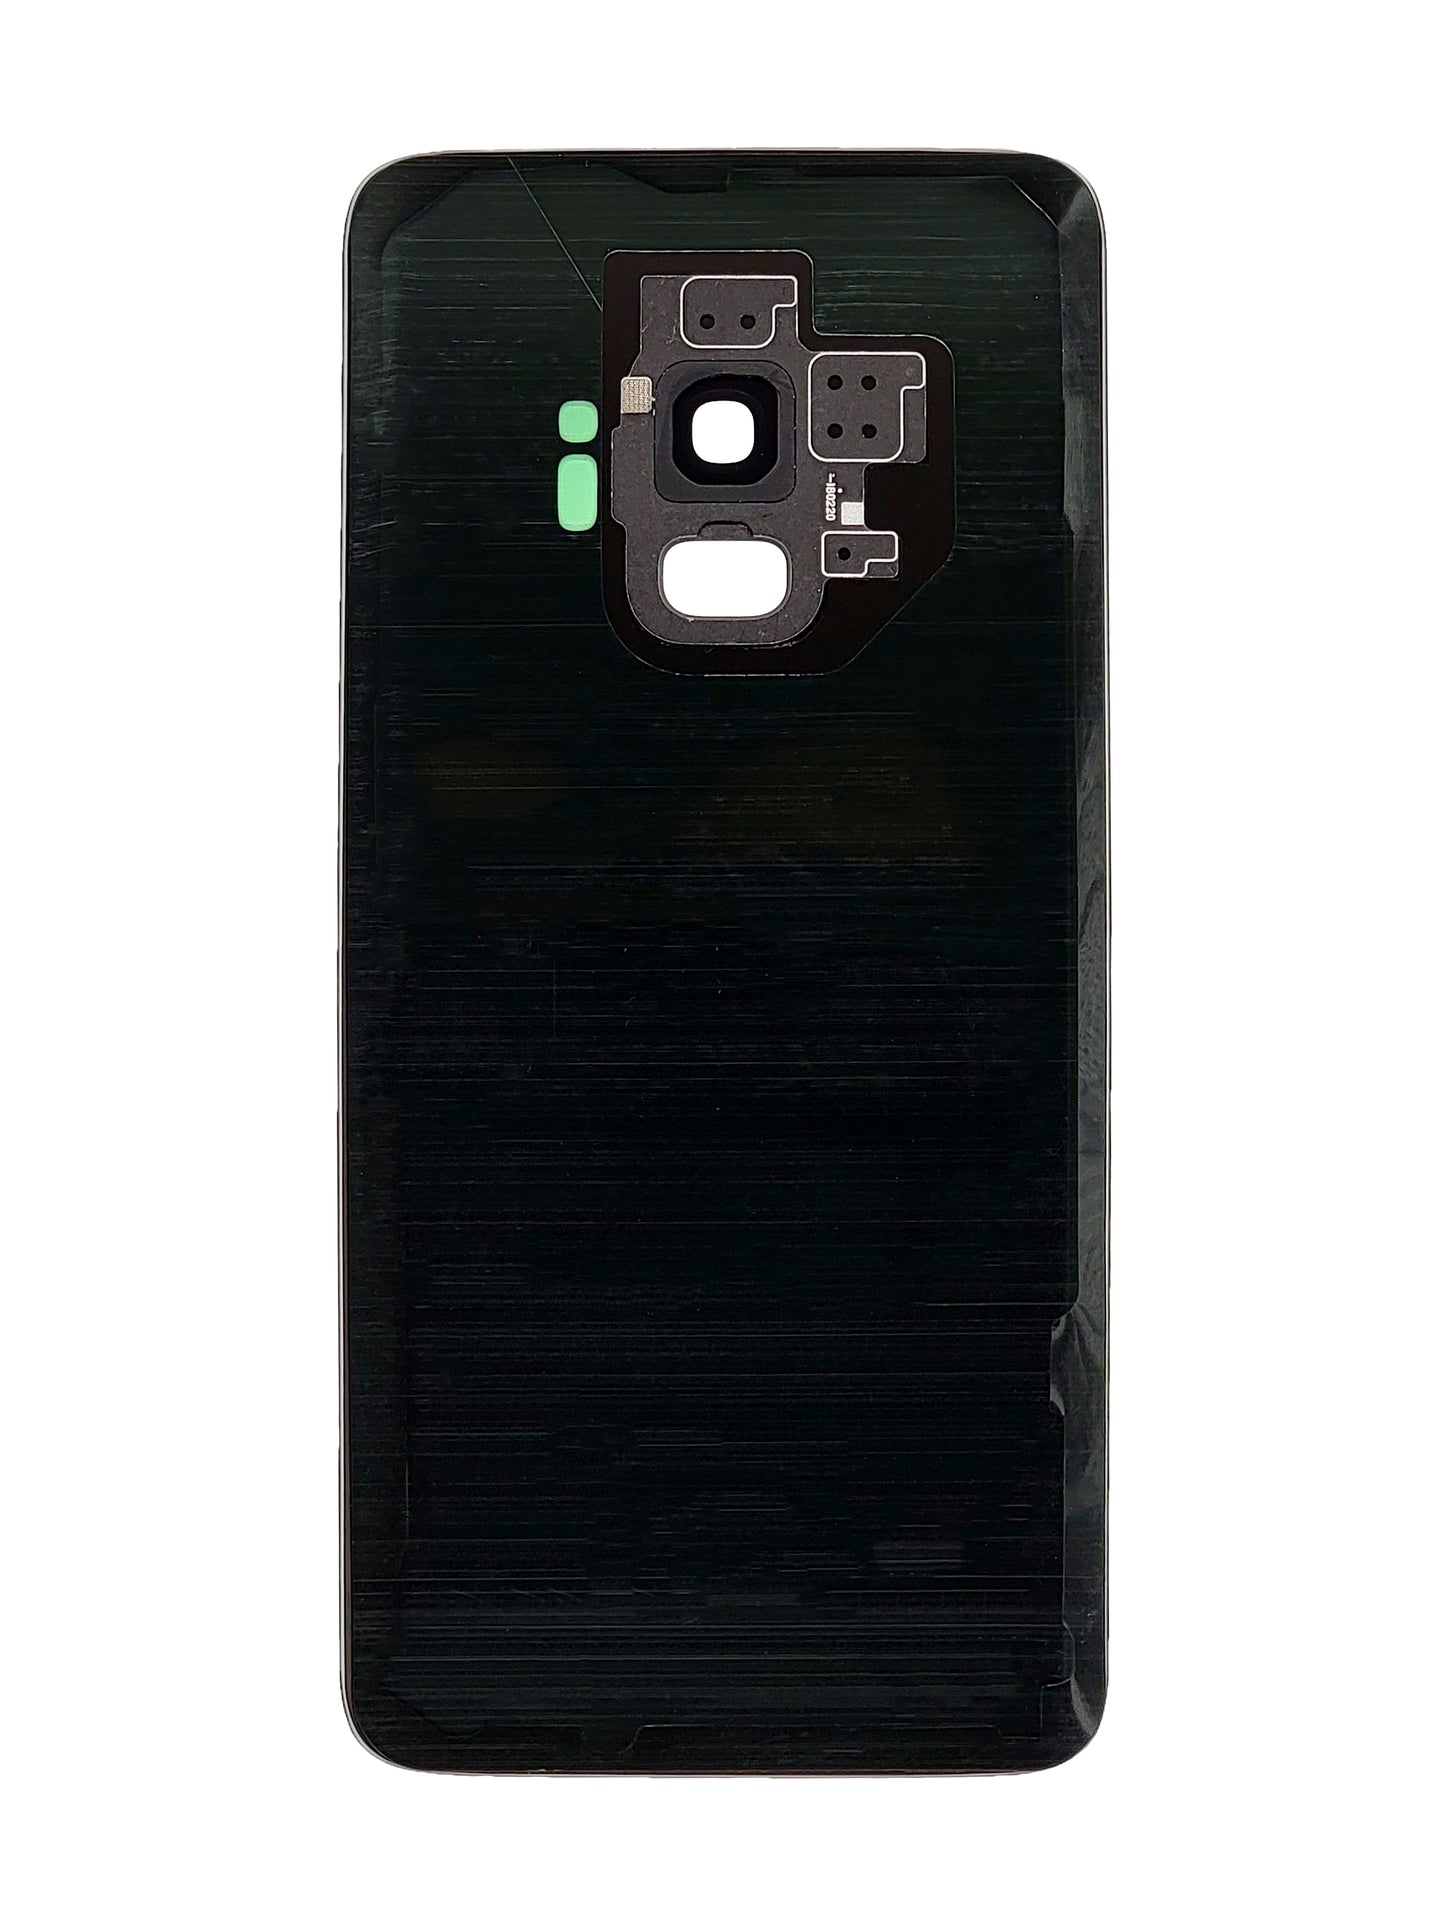 SGS S9 Back Cover (Black)